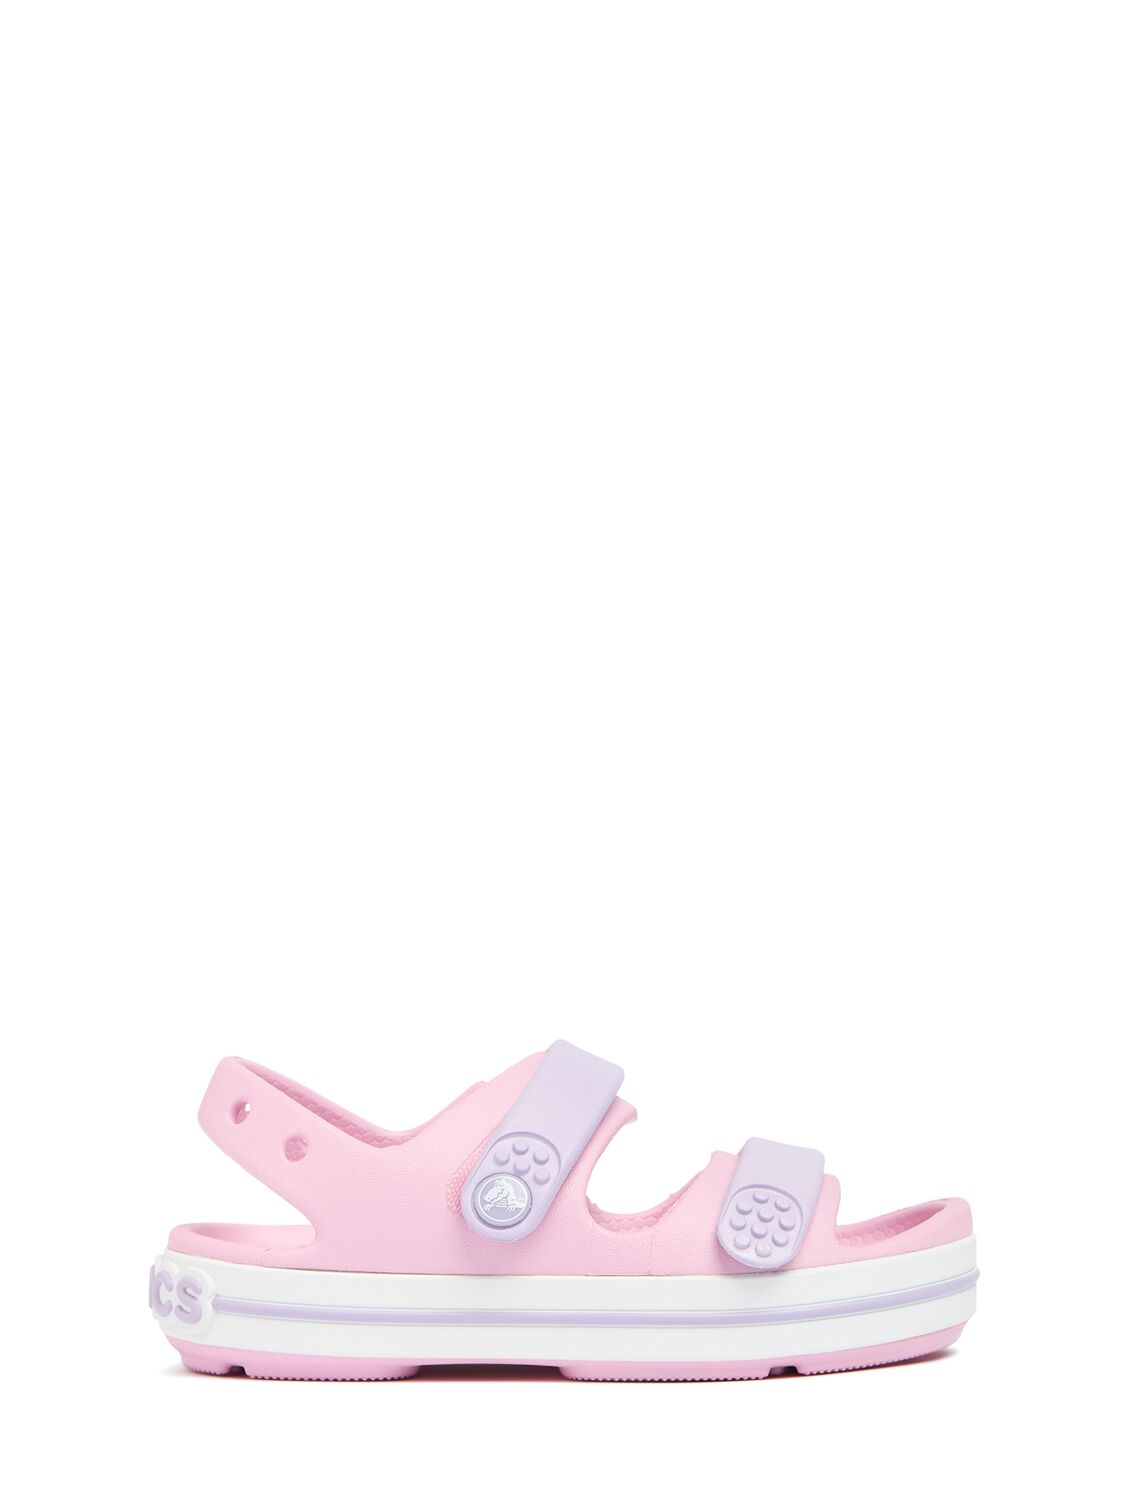 Crocs Rubber Sandals In Pink